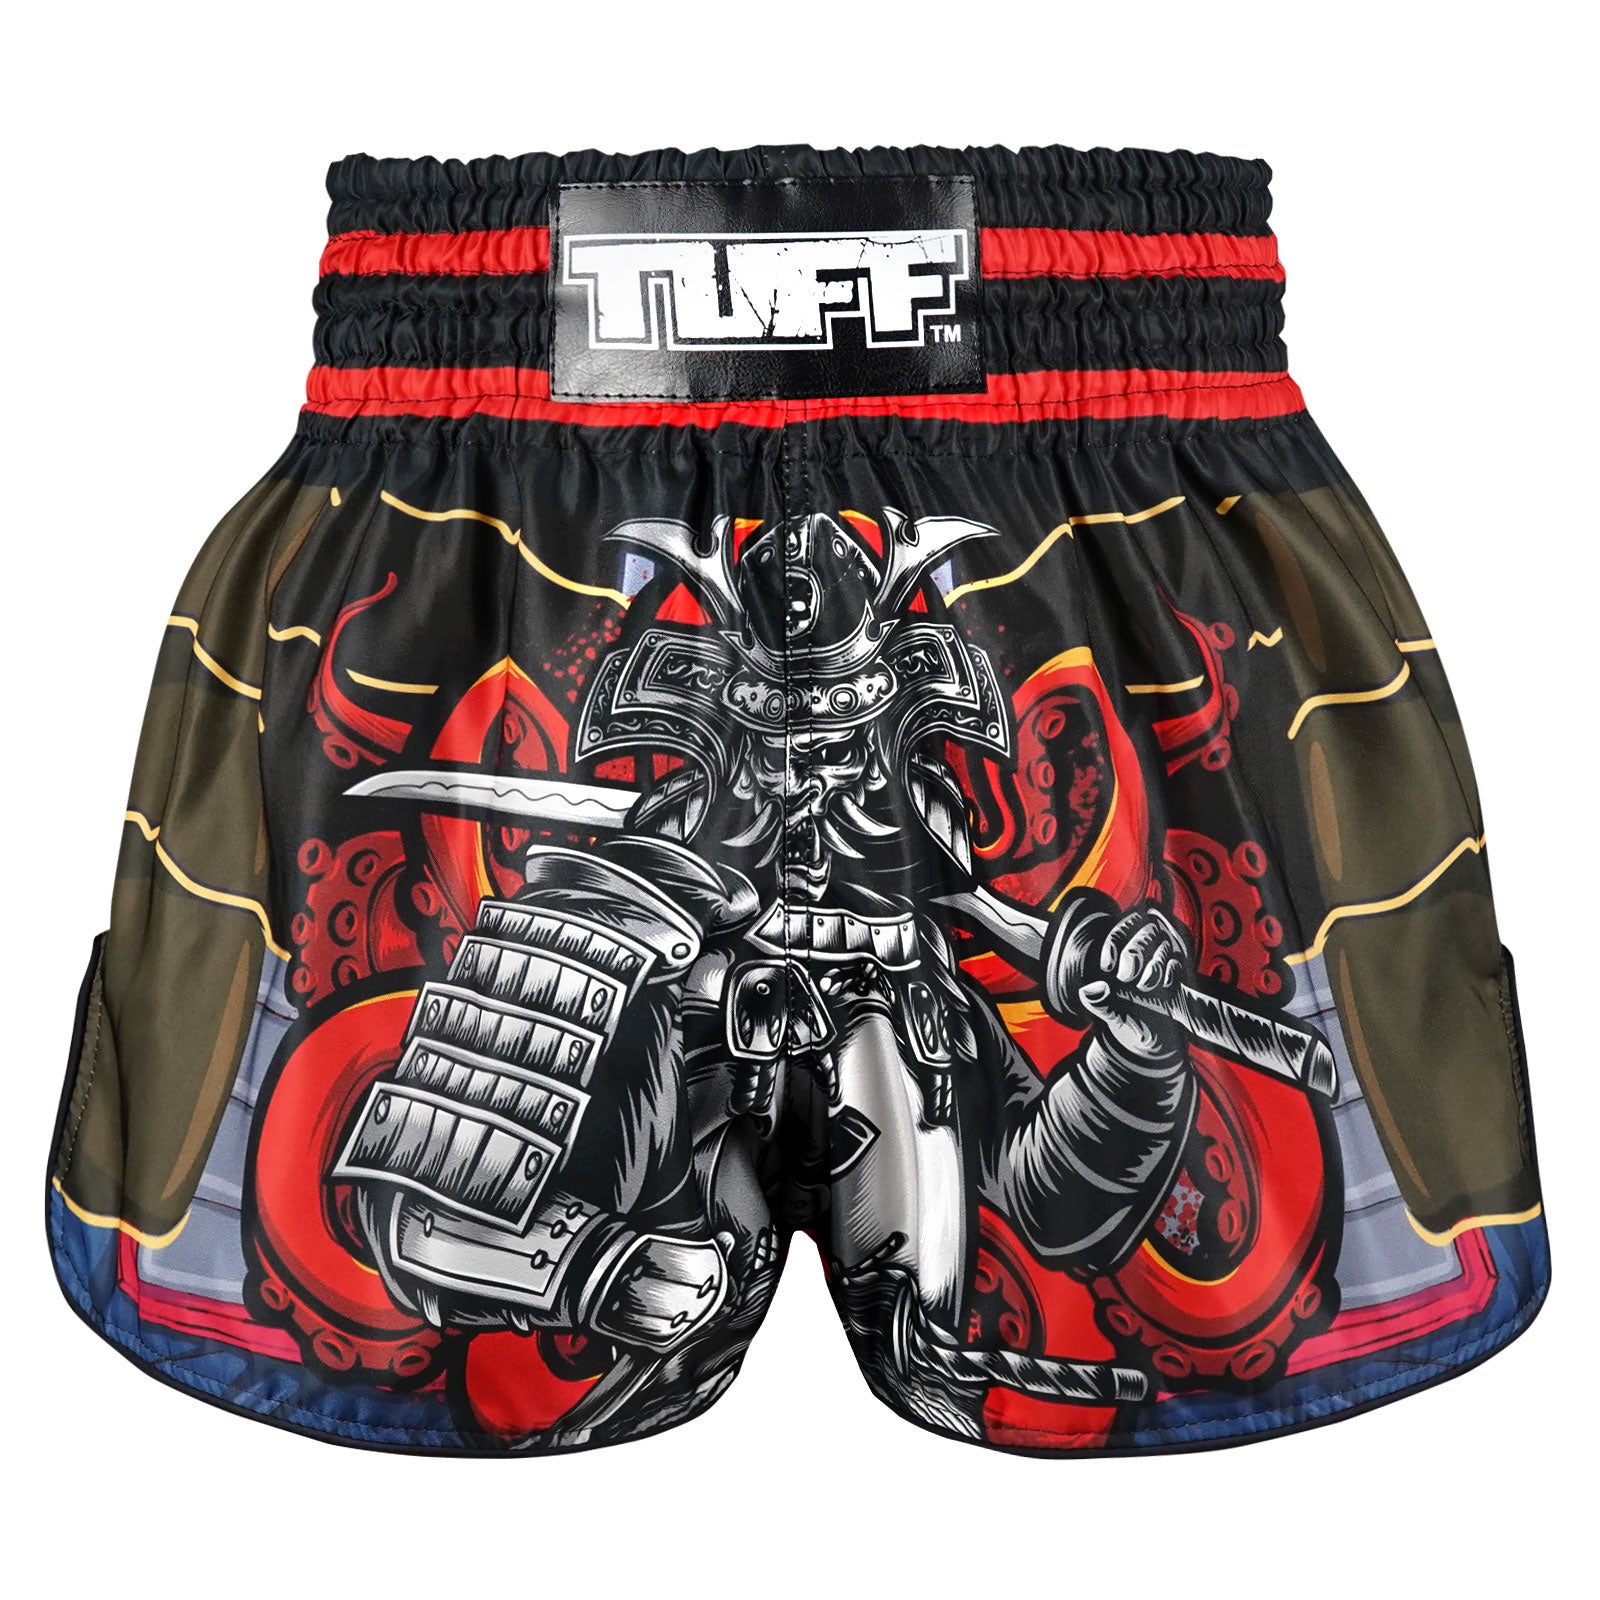 Shorts de Muay Thai Tuff High Cut Retro Samurai 1